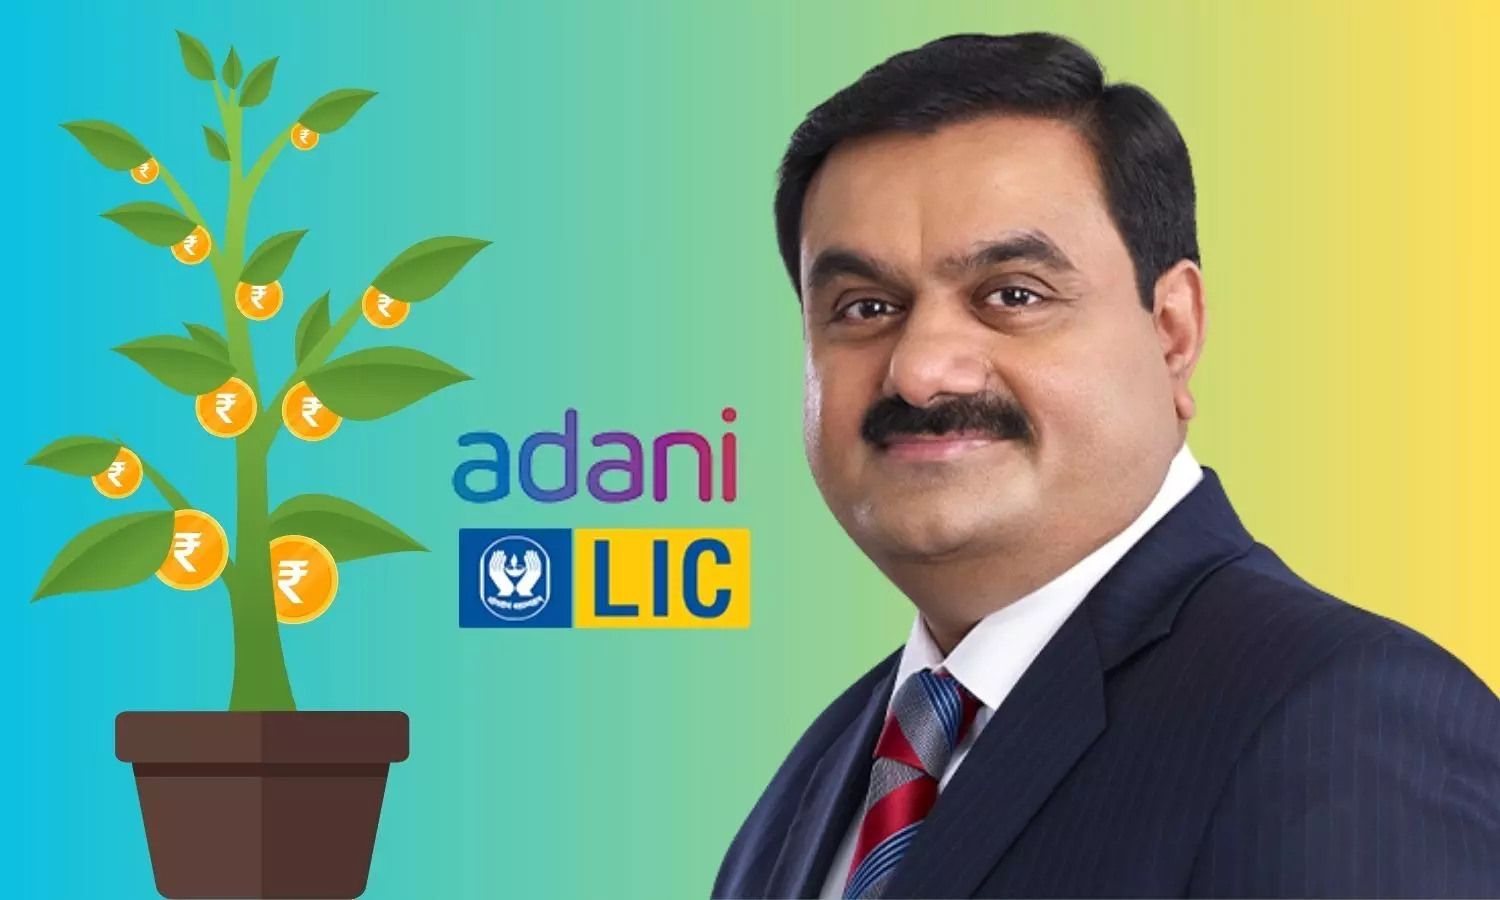 Gautam Adani, LIC logo, Adani Group logo, Rupee tree